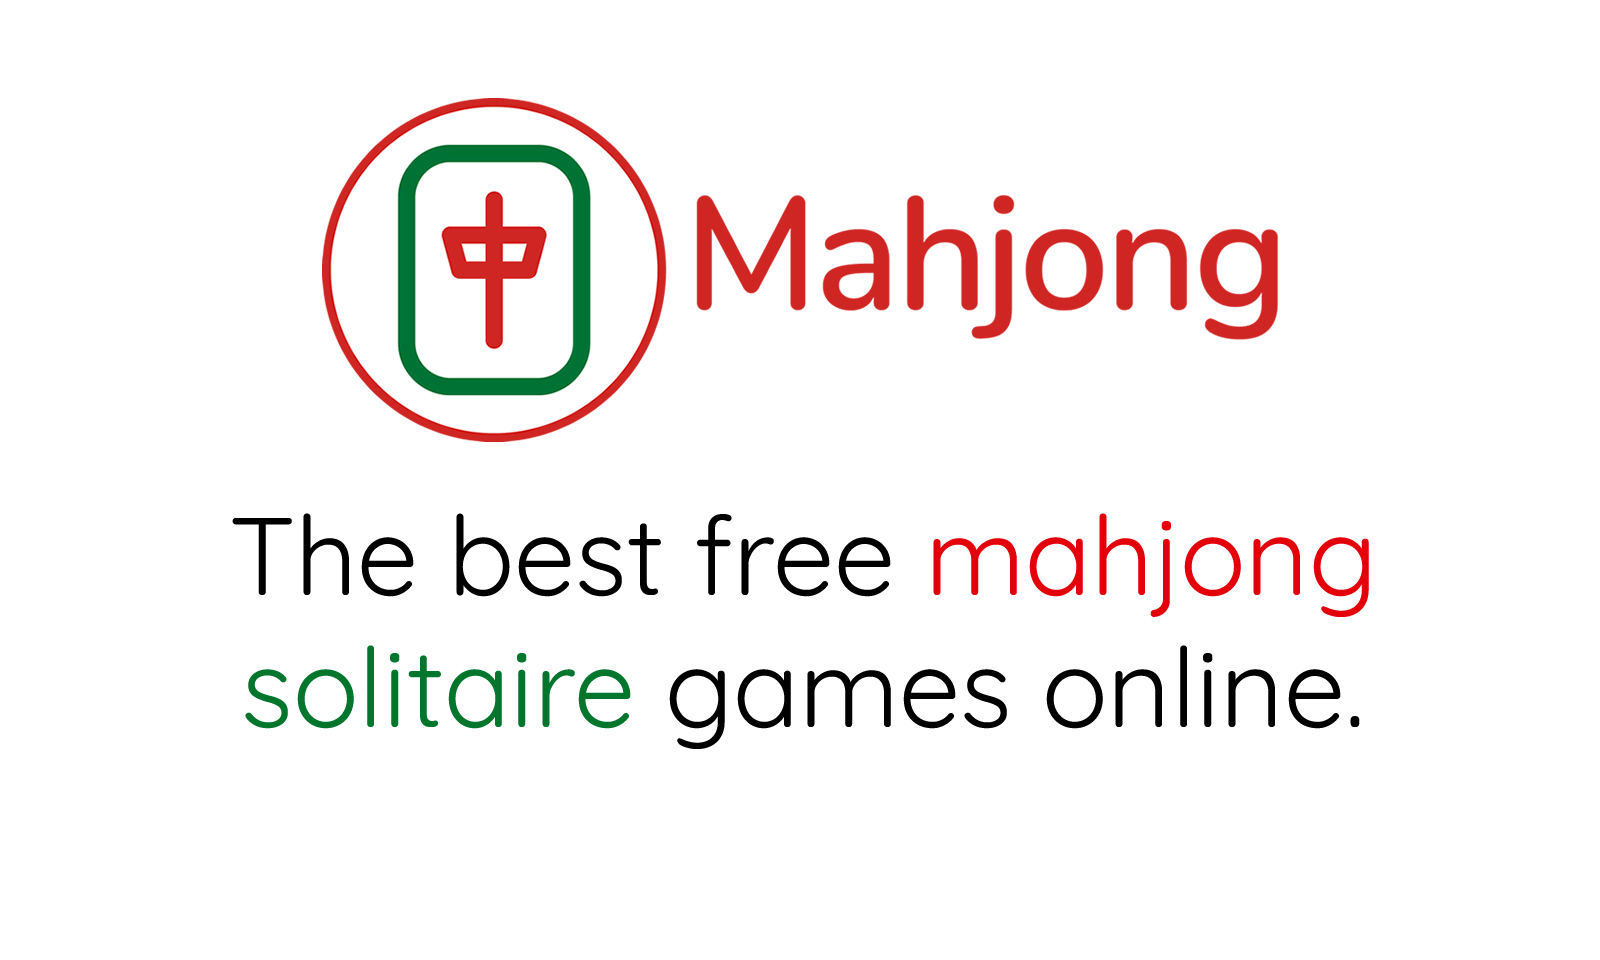 🀄 Mahjong Connect Isla ➜ juego Mahjong gratis online! 🥇